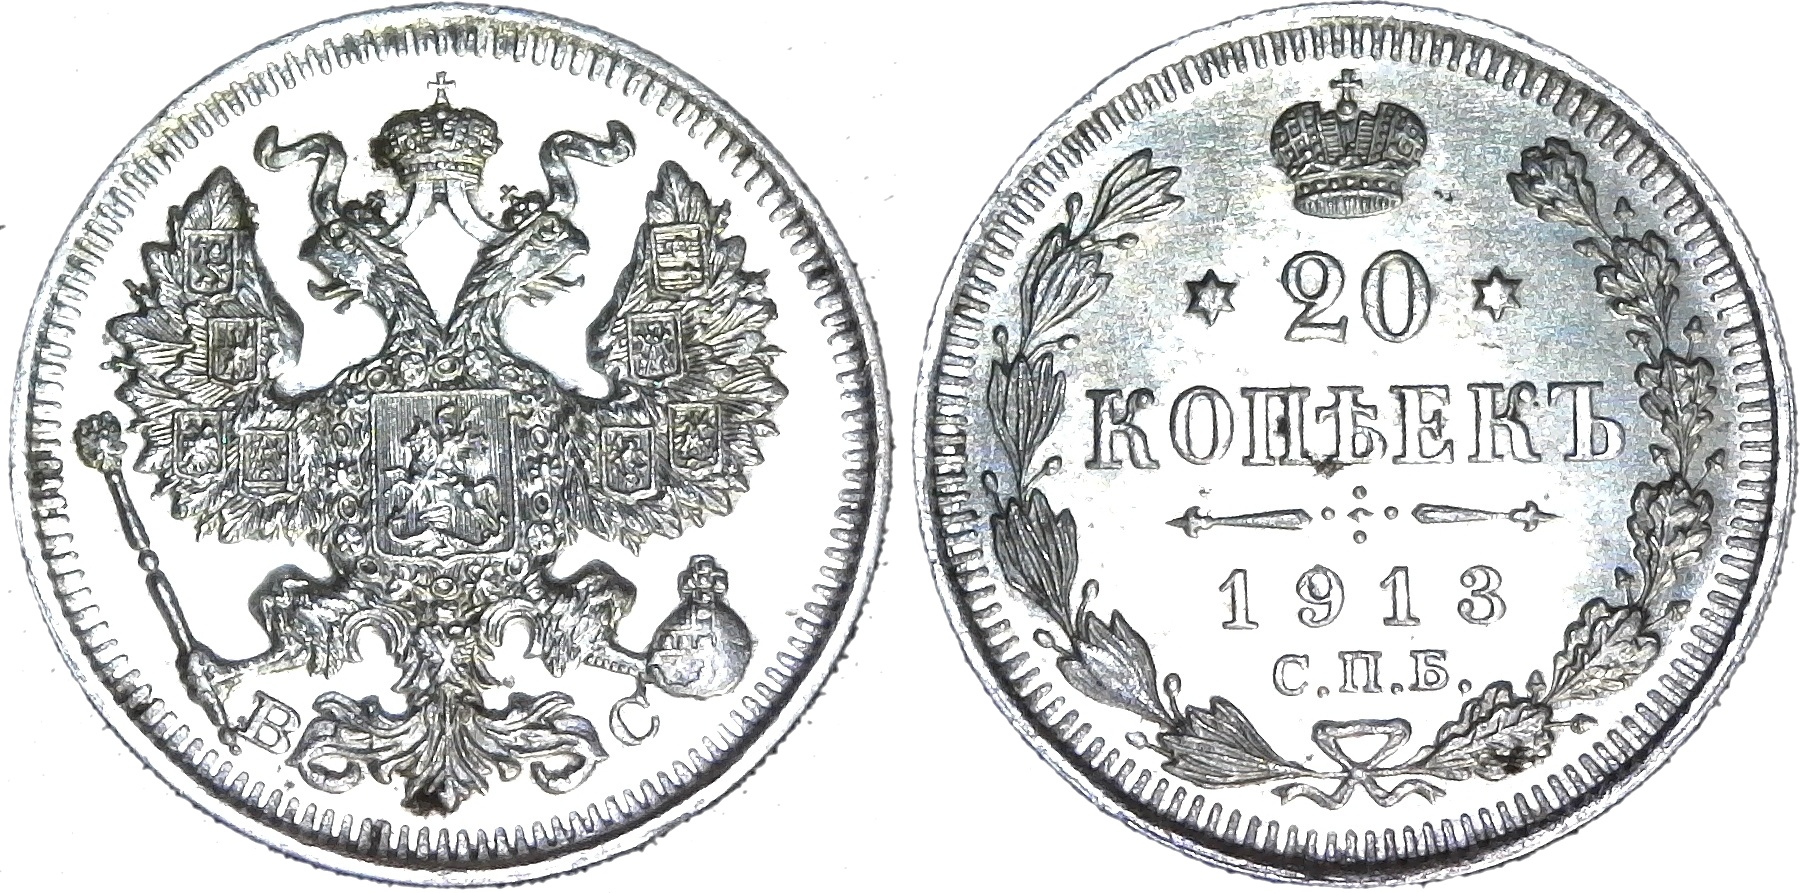 RUSSIA - 1913 - SILVER - 20 KOPECS - Y22 rev-side-cutout.jpg